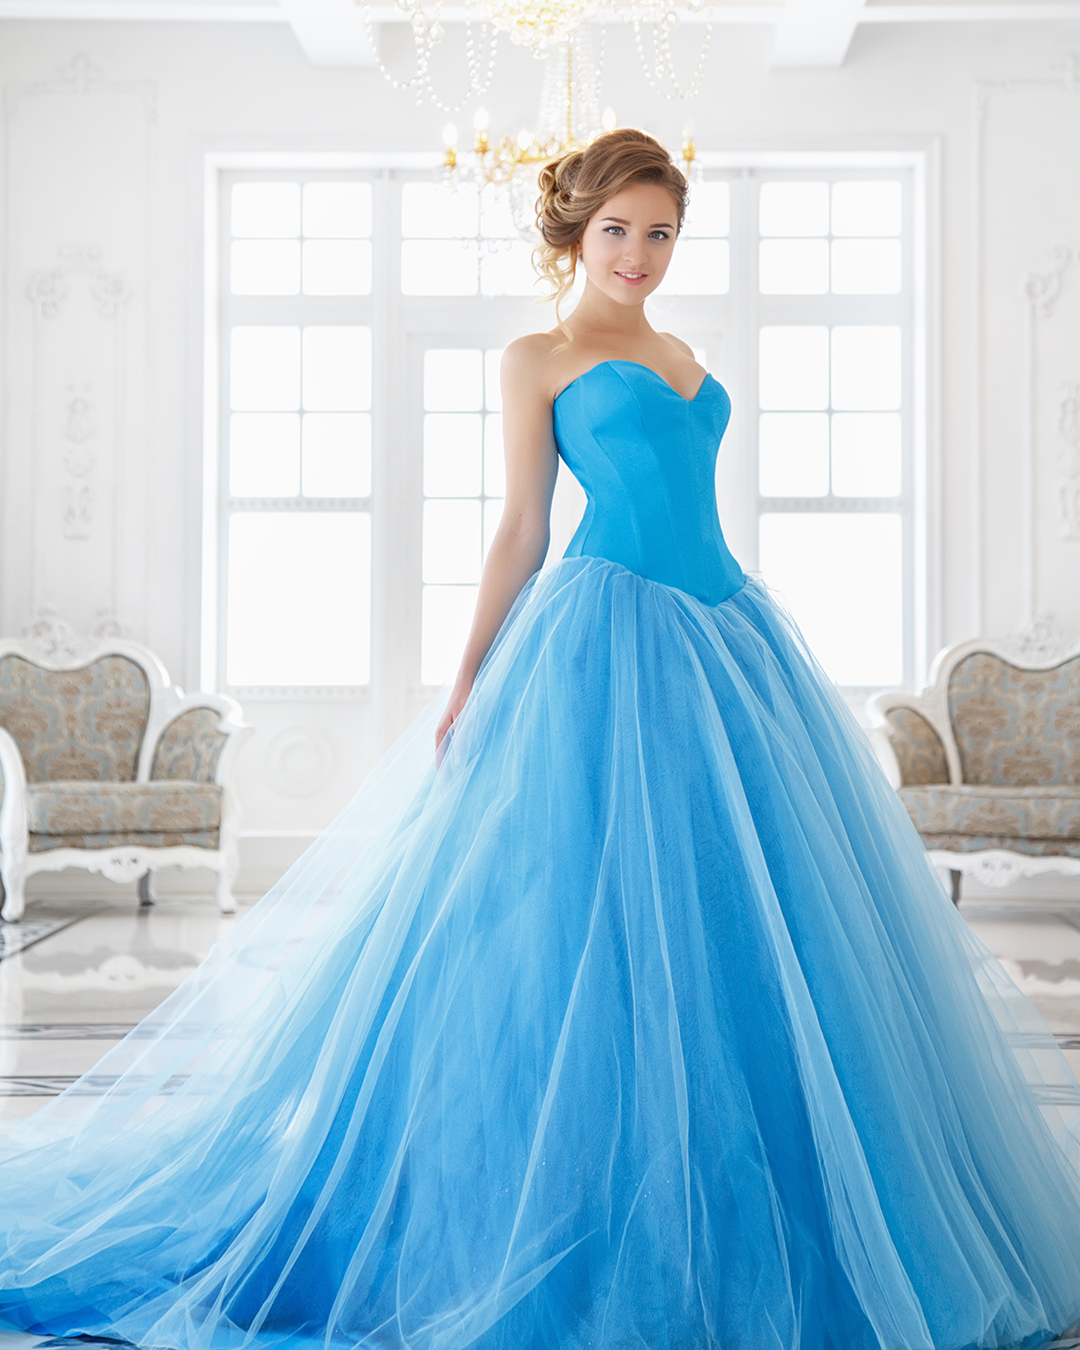 blue wedding dresses simple royal strapless neckline shutterstock